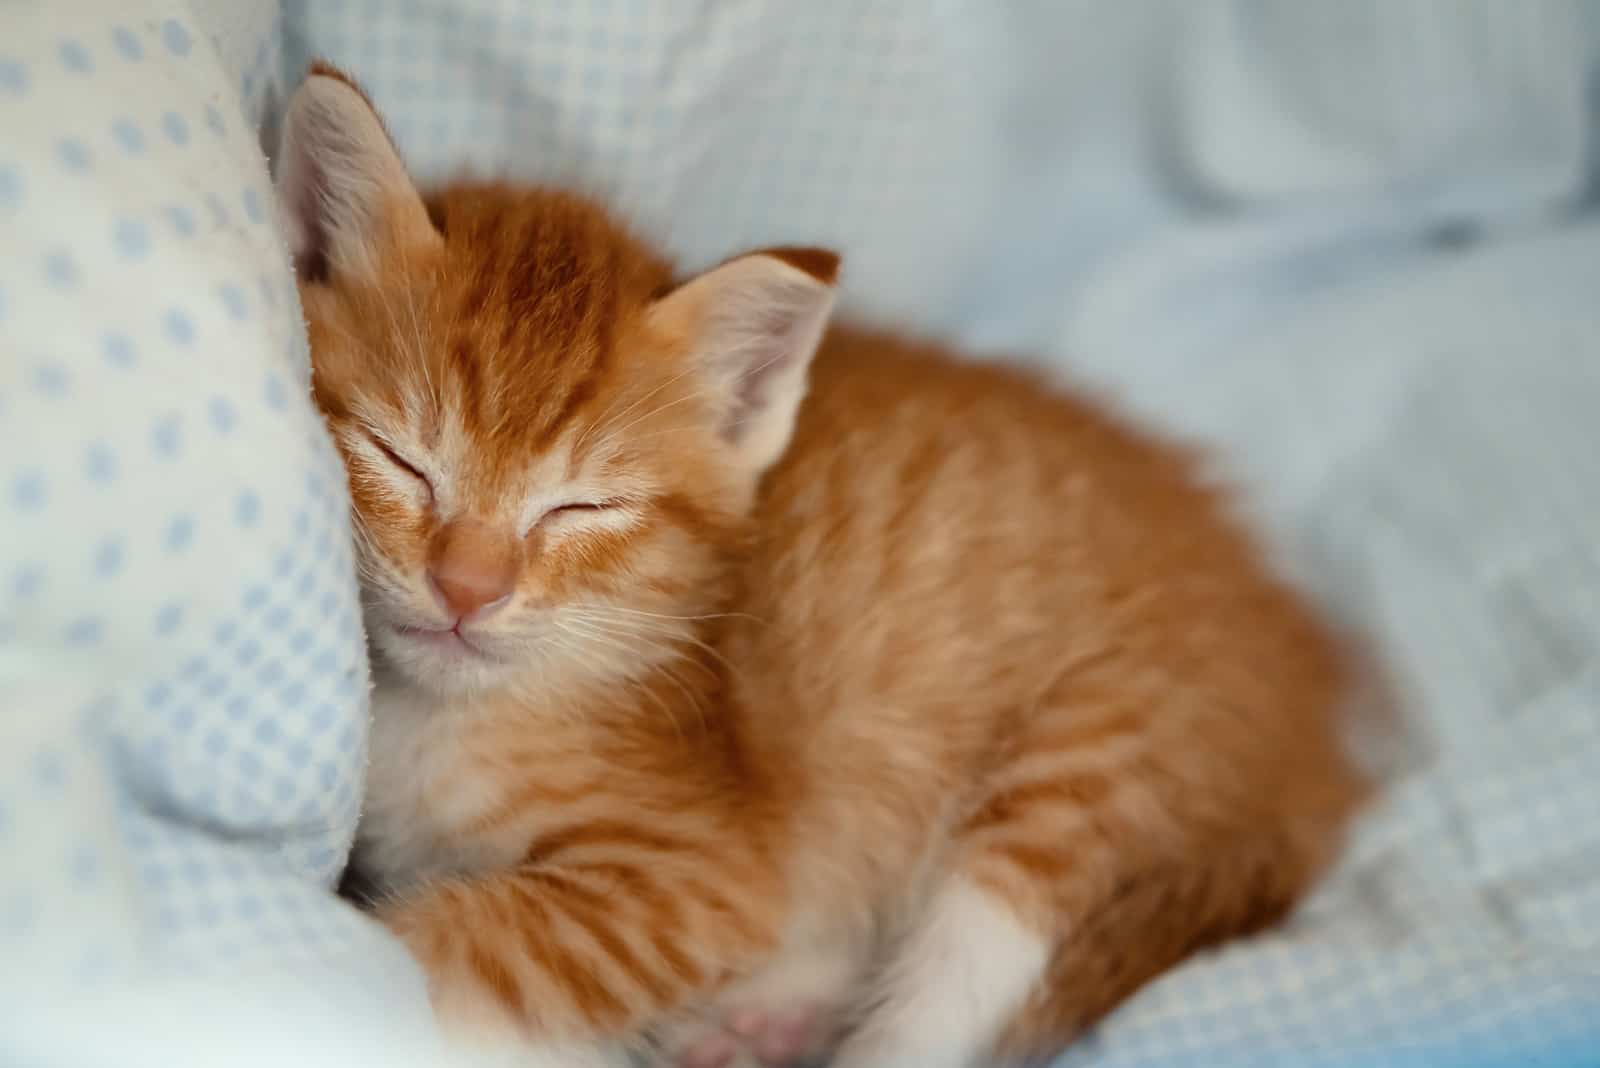 curled up orange cat sleeping on bed